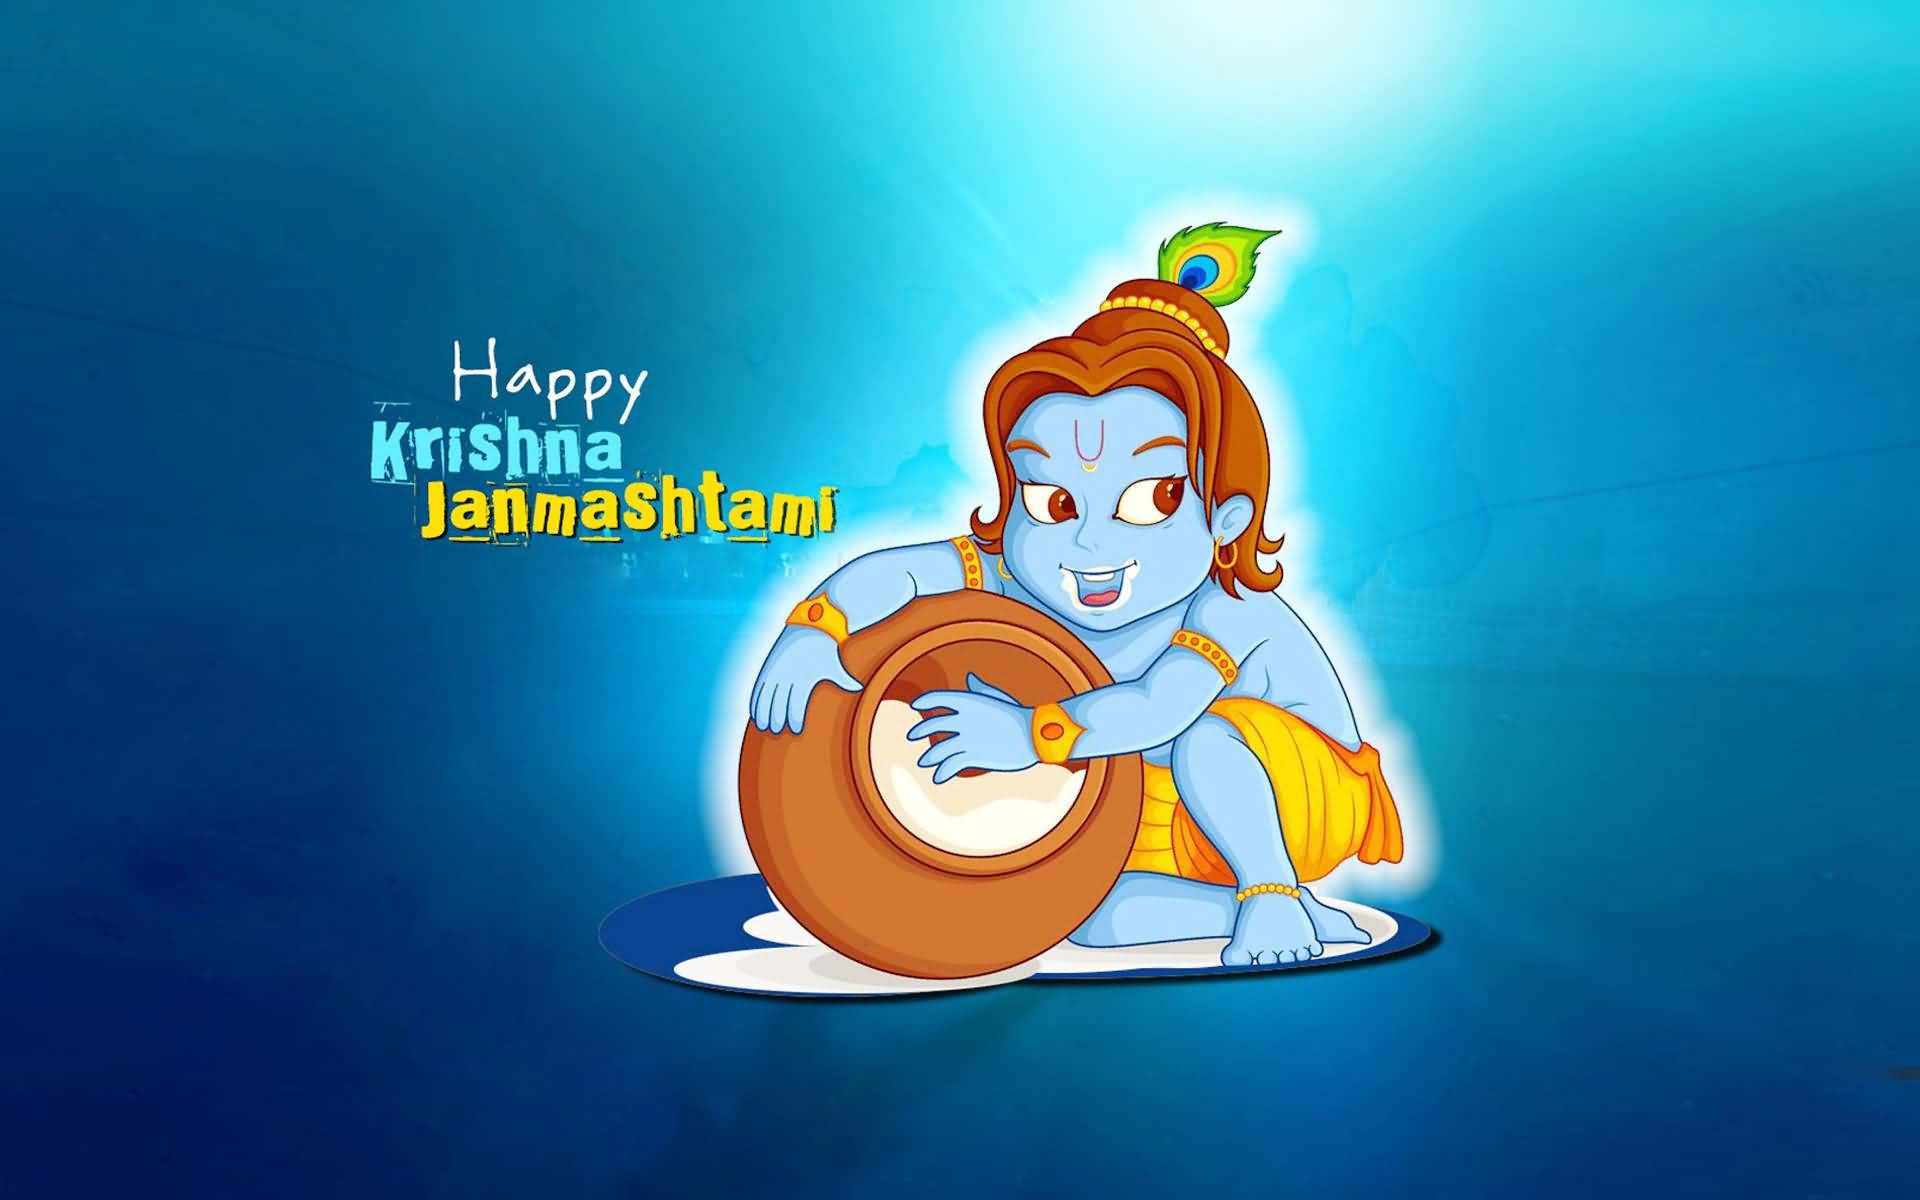 Happy Krishna Janmashtami Lord Krishna Eating Butter Illustration